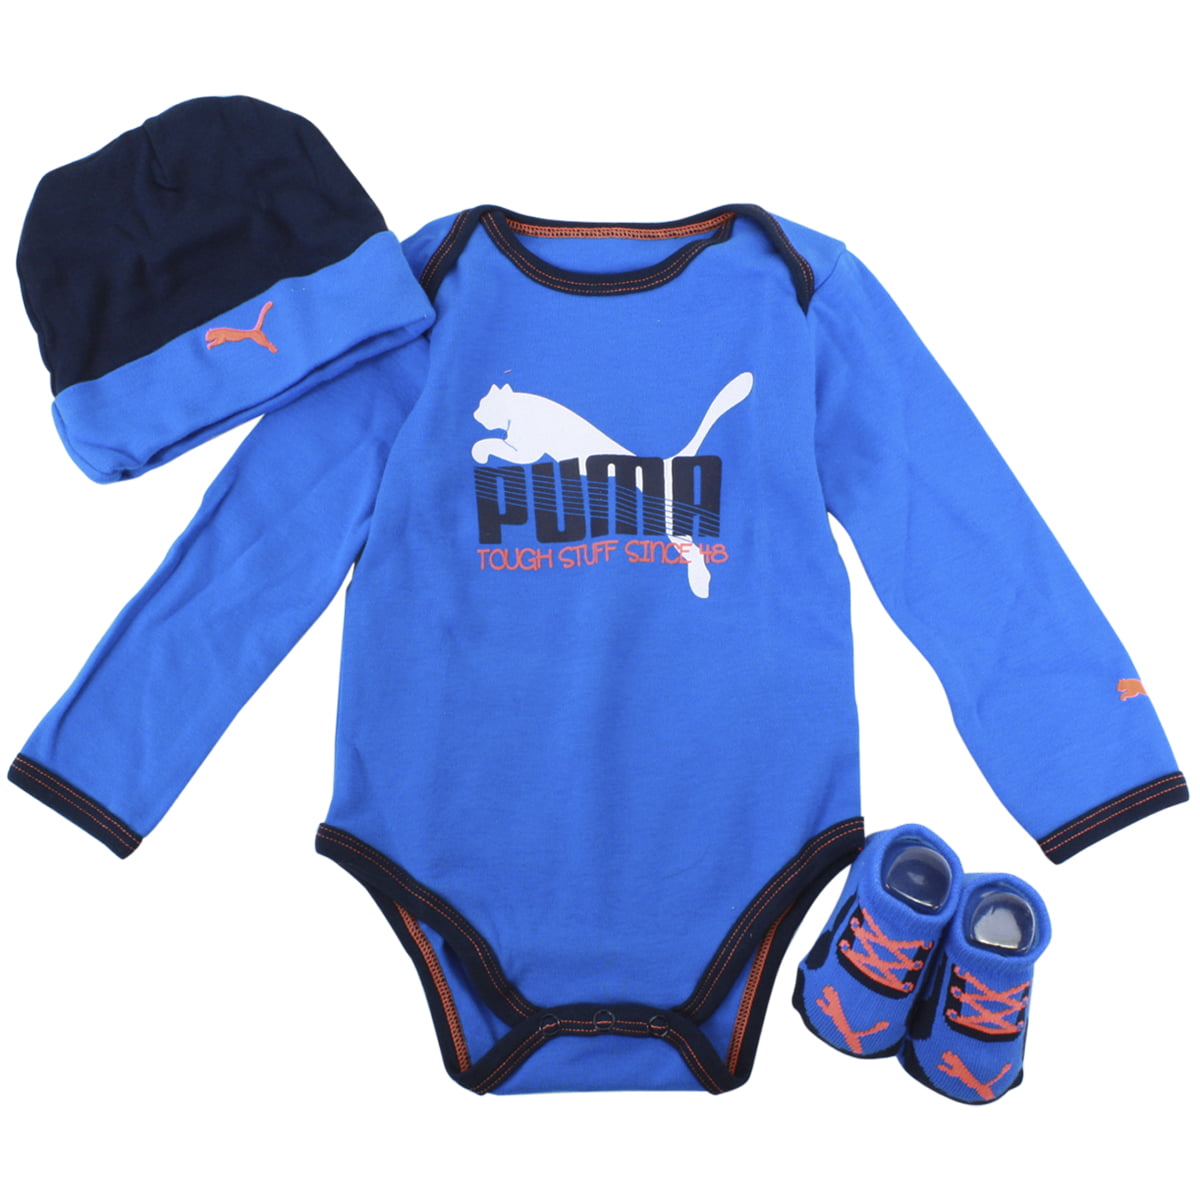 puma newborn clothes